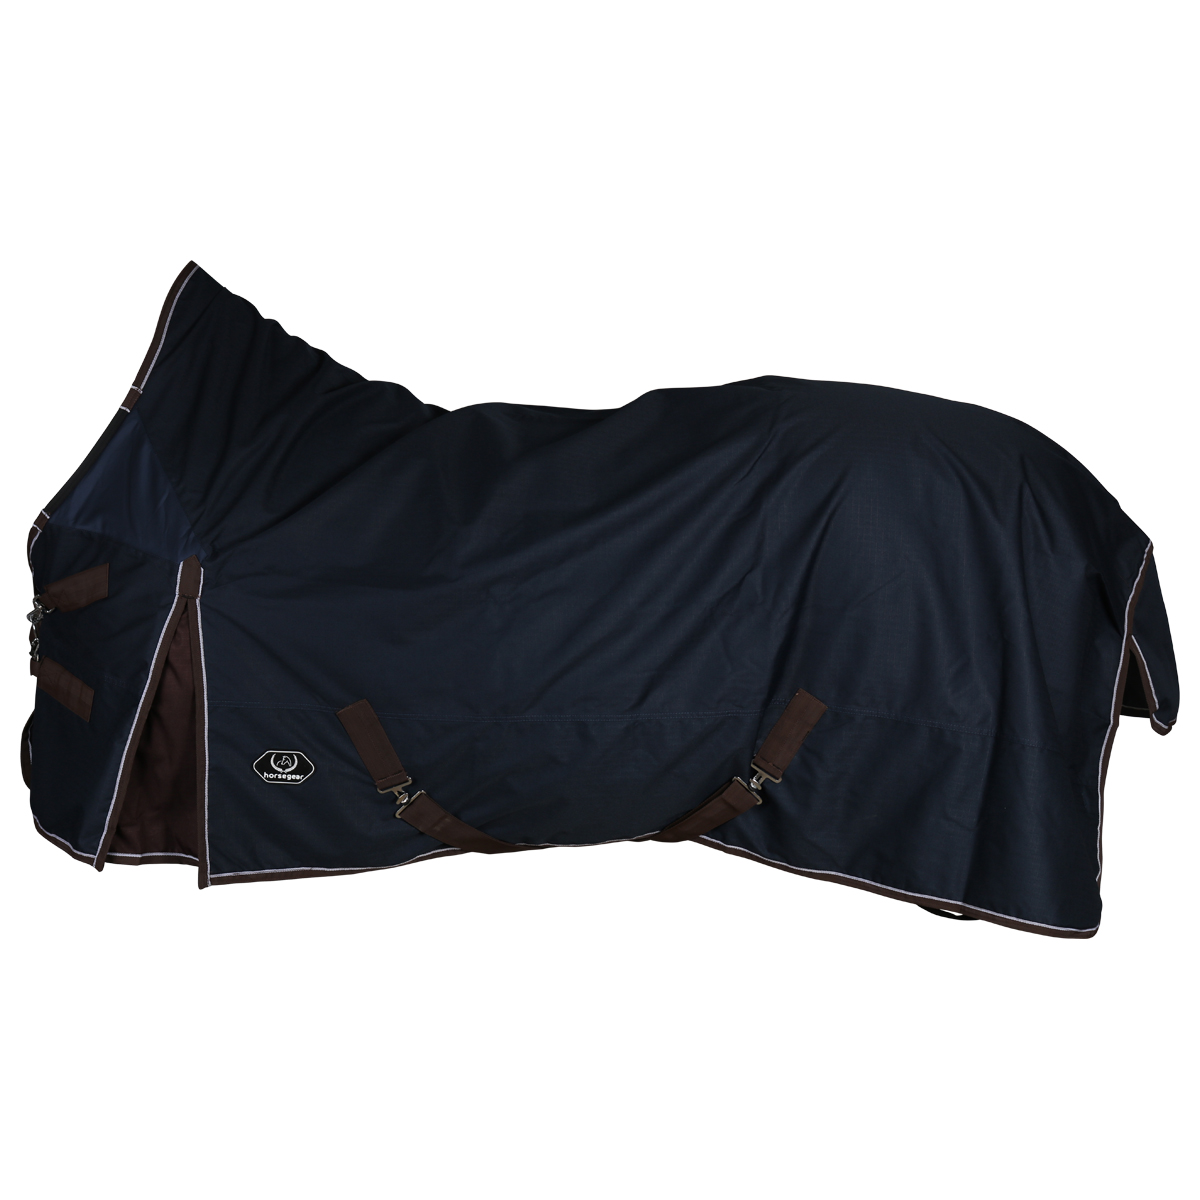 Deken Horsegear Aquero 0gr Donkerblauw-donkerbruin, 205 cm in donkerblauw/donkerbruin